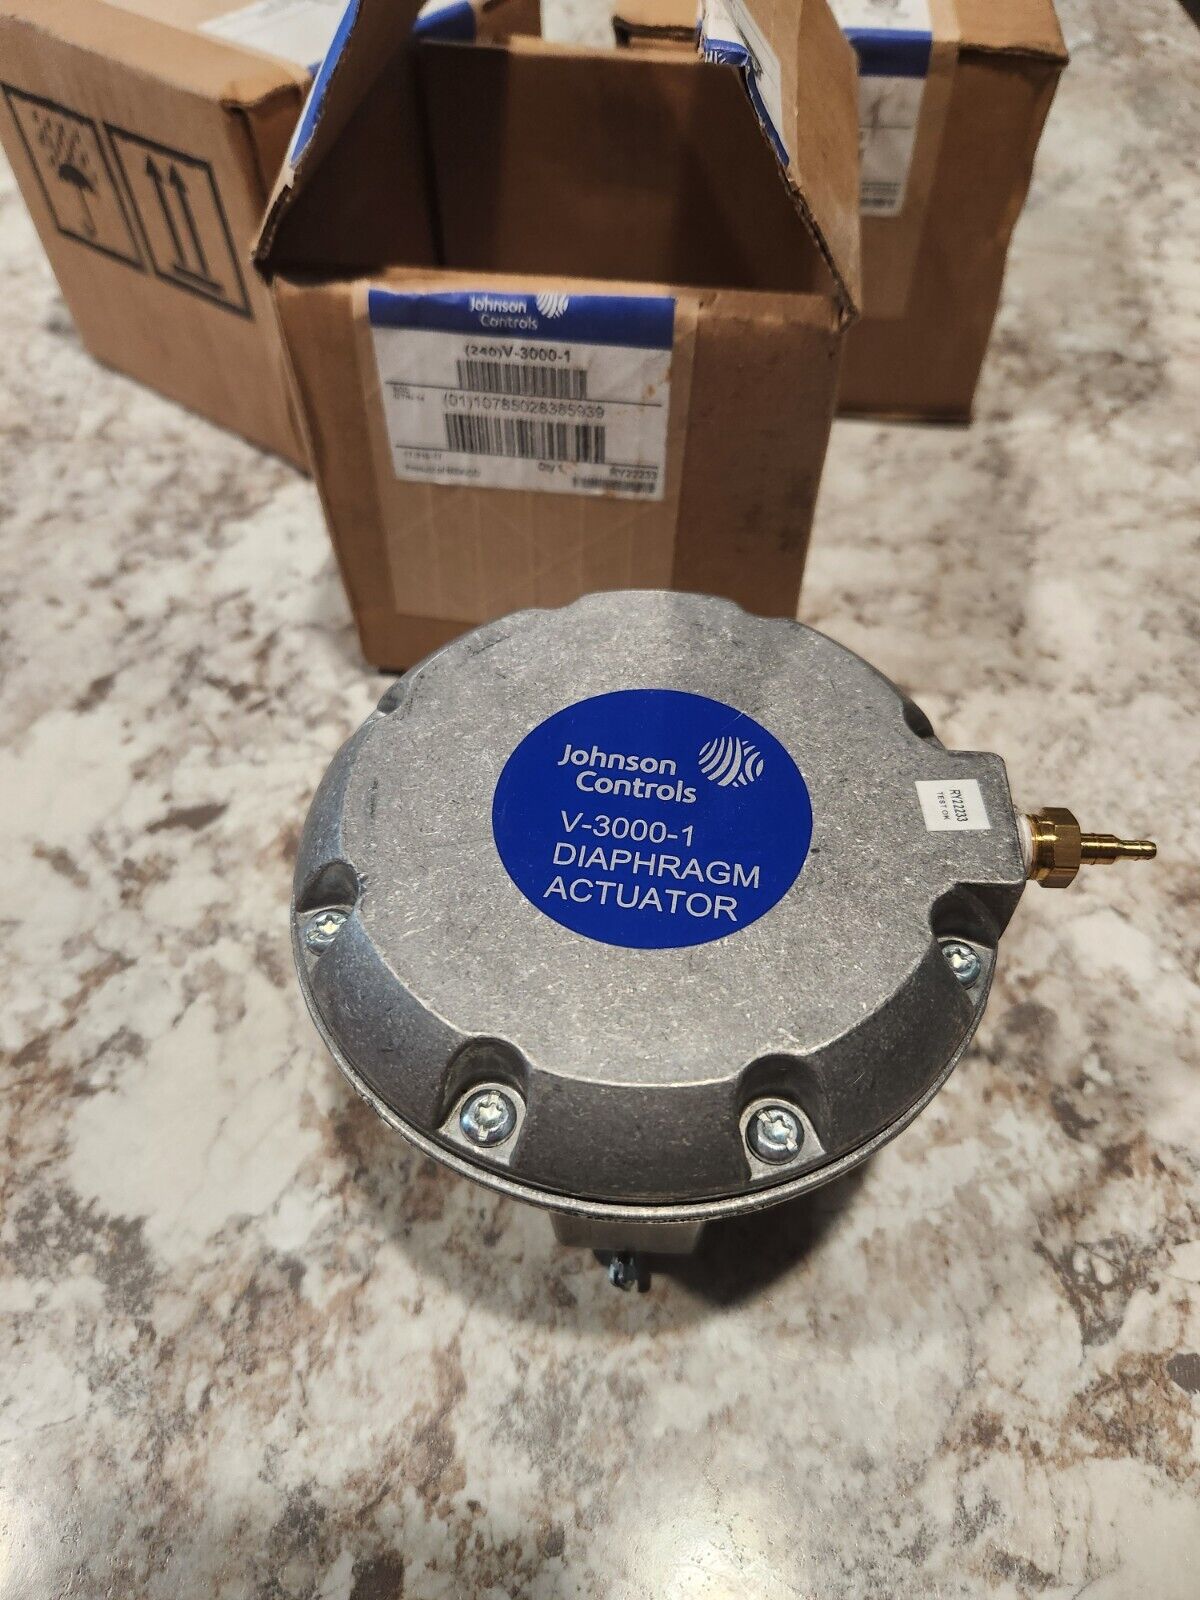 Johnson Controls Diaphragm Actuator Valve V-3000-1 - New in Box Lot Of 3